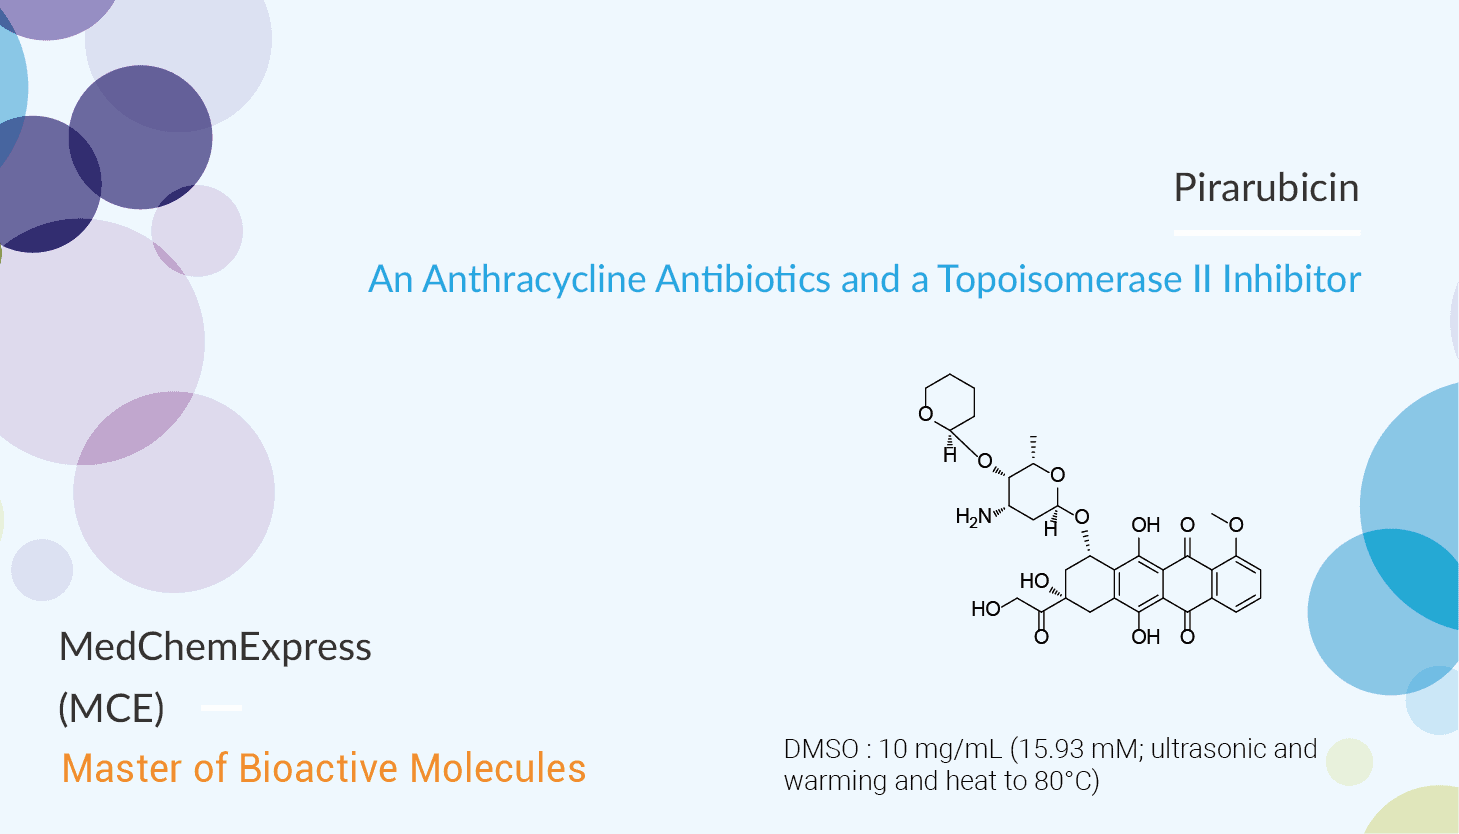 Pirarubicin, an Anthracycline Antibiotics, Acts as a Topoisomerase II Inhibitor